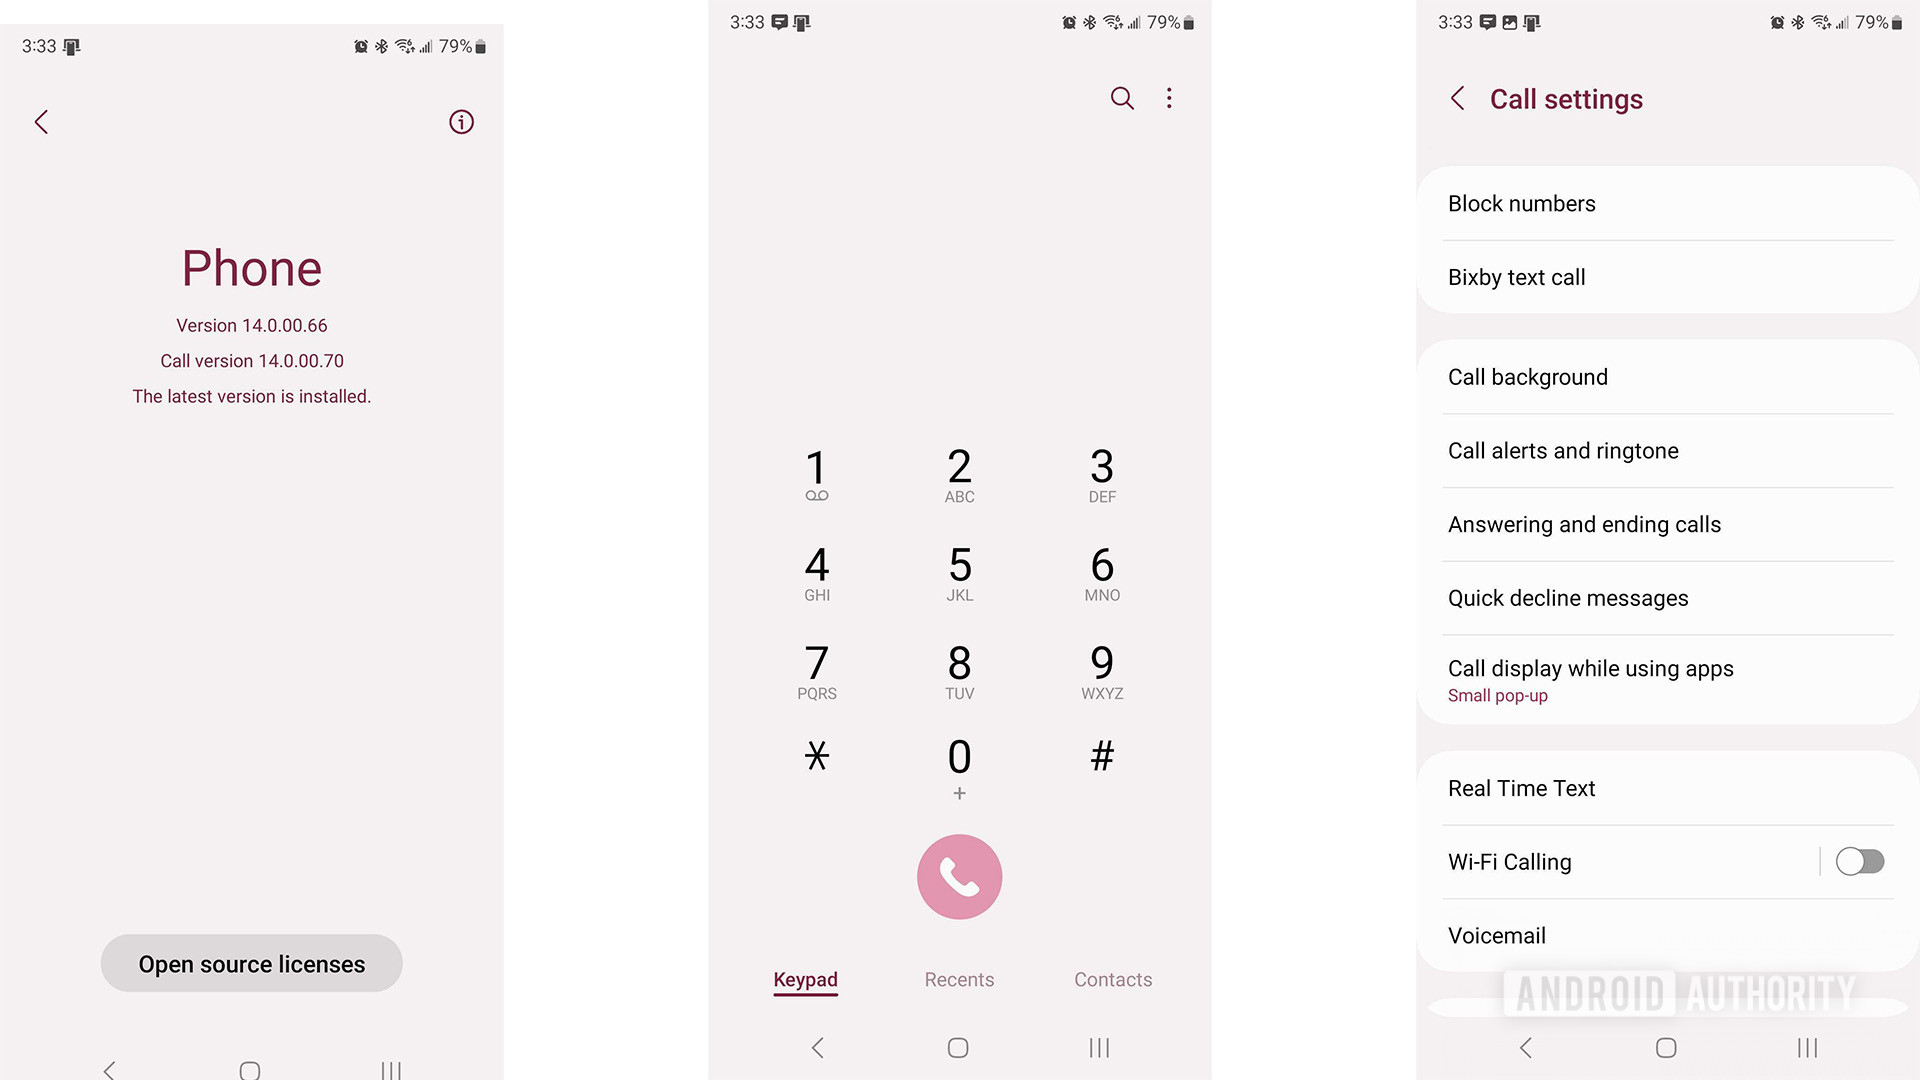 Samsung Phone Dialer screenshot 2022